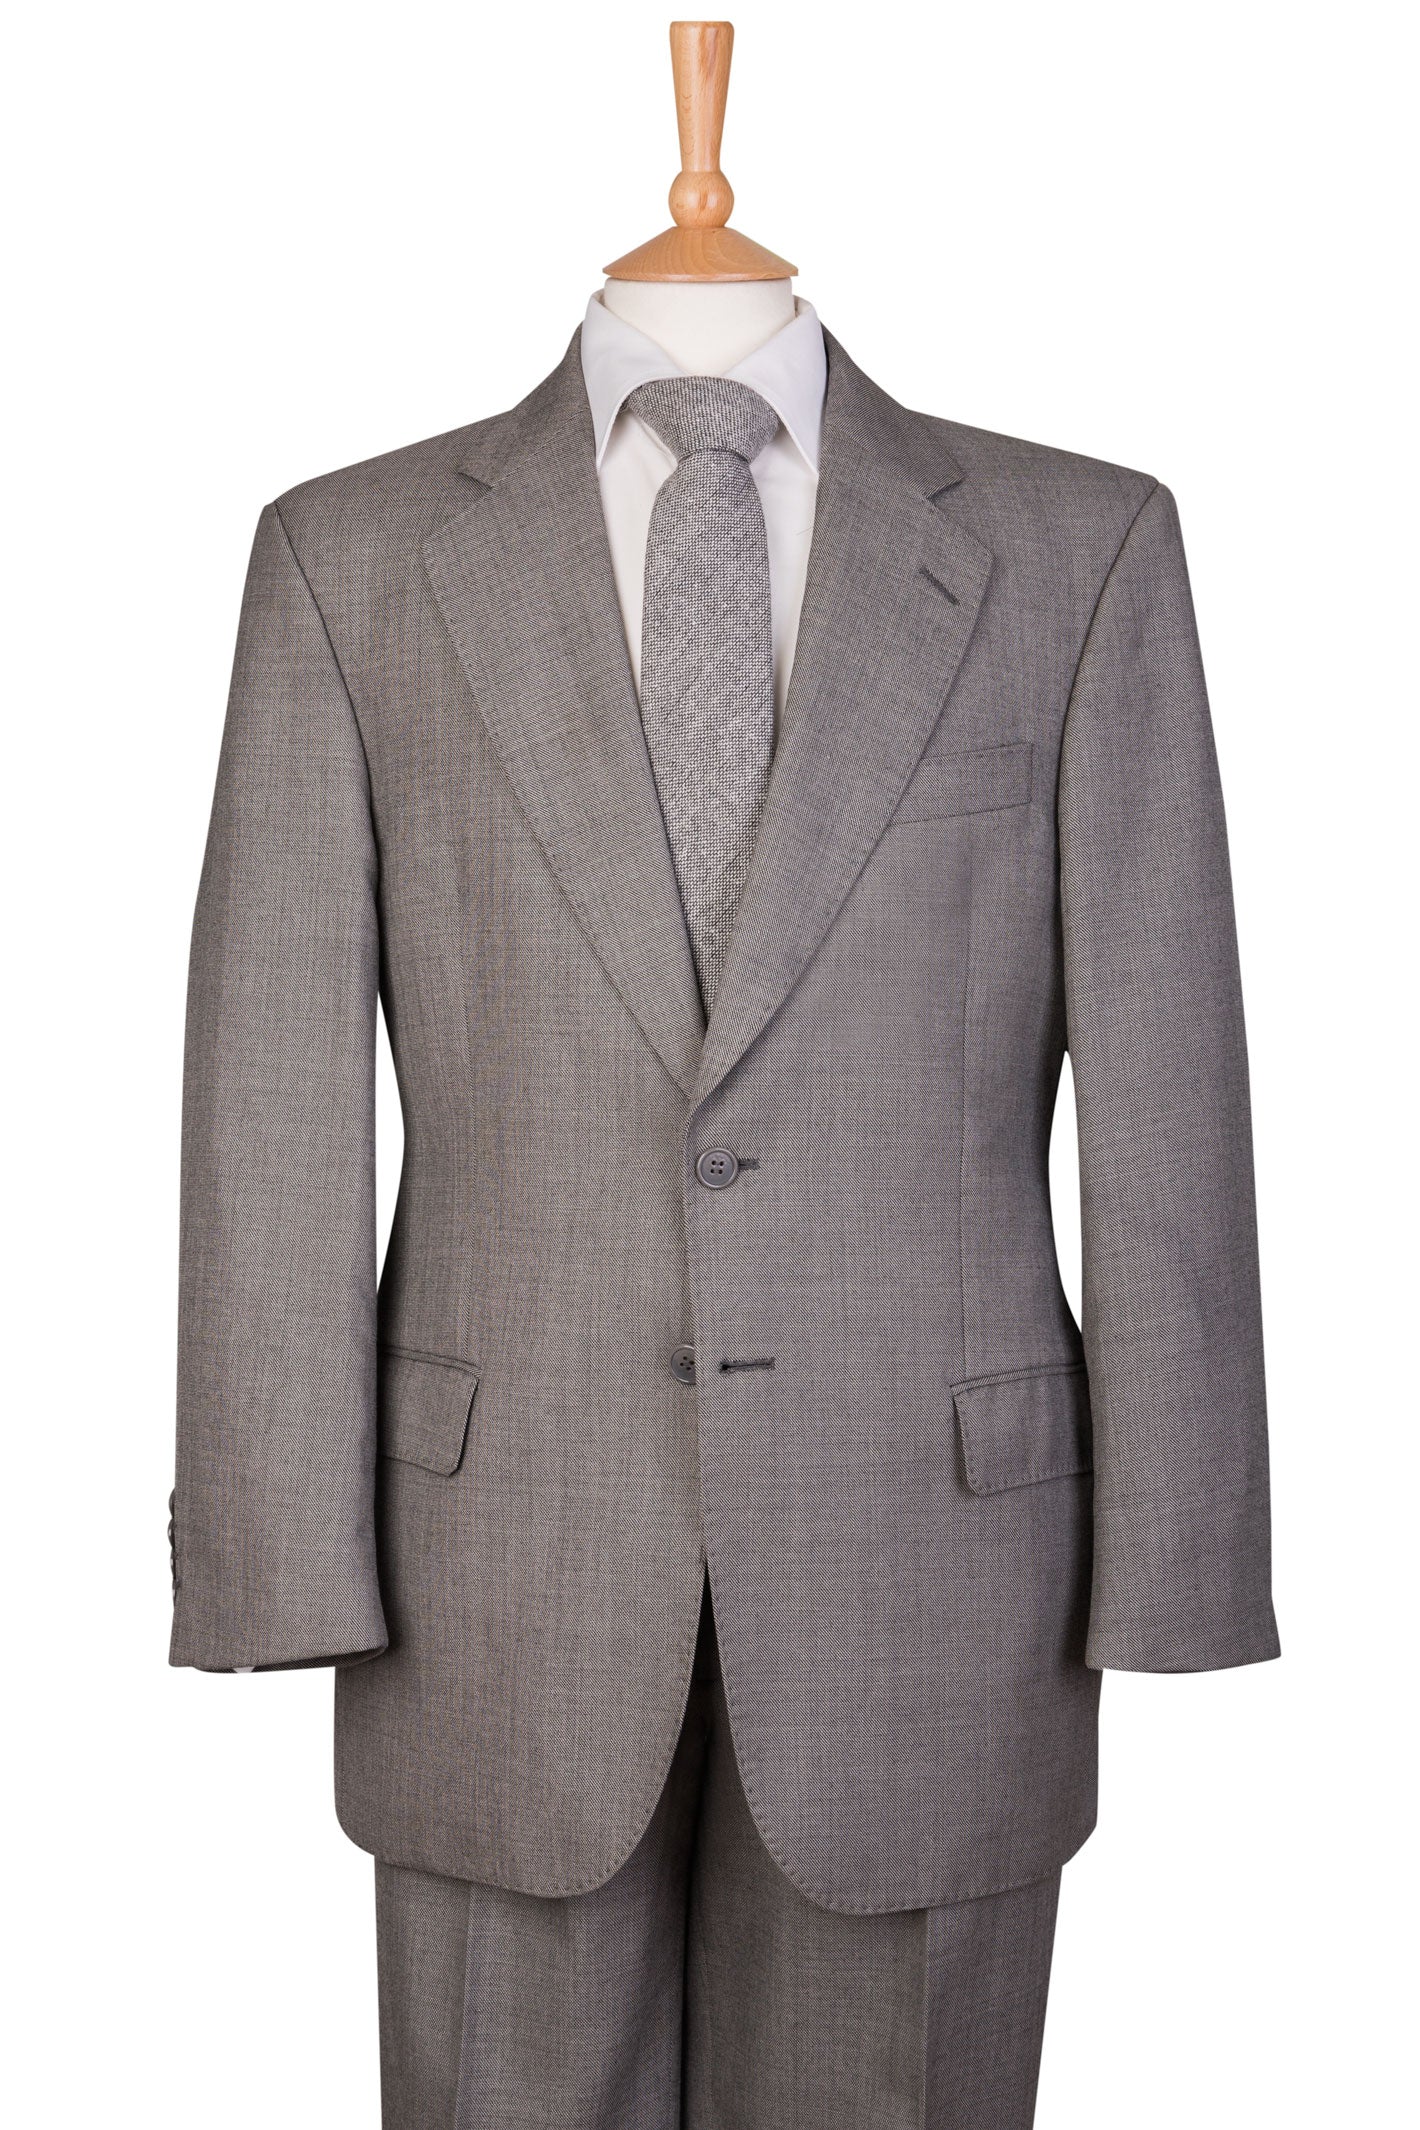 Dove Grey Suit Jacket - Ex Hire – Richard Paul Menswear